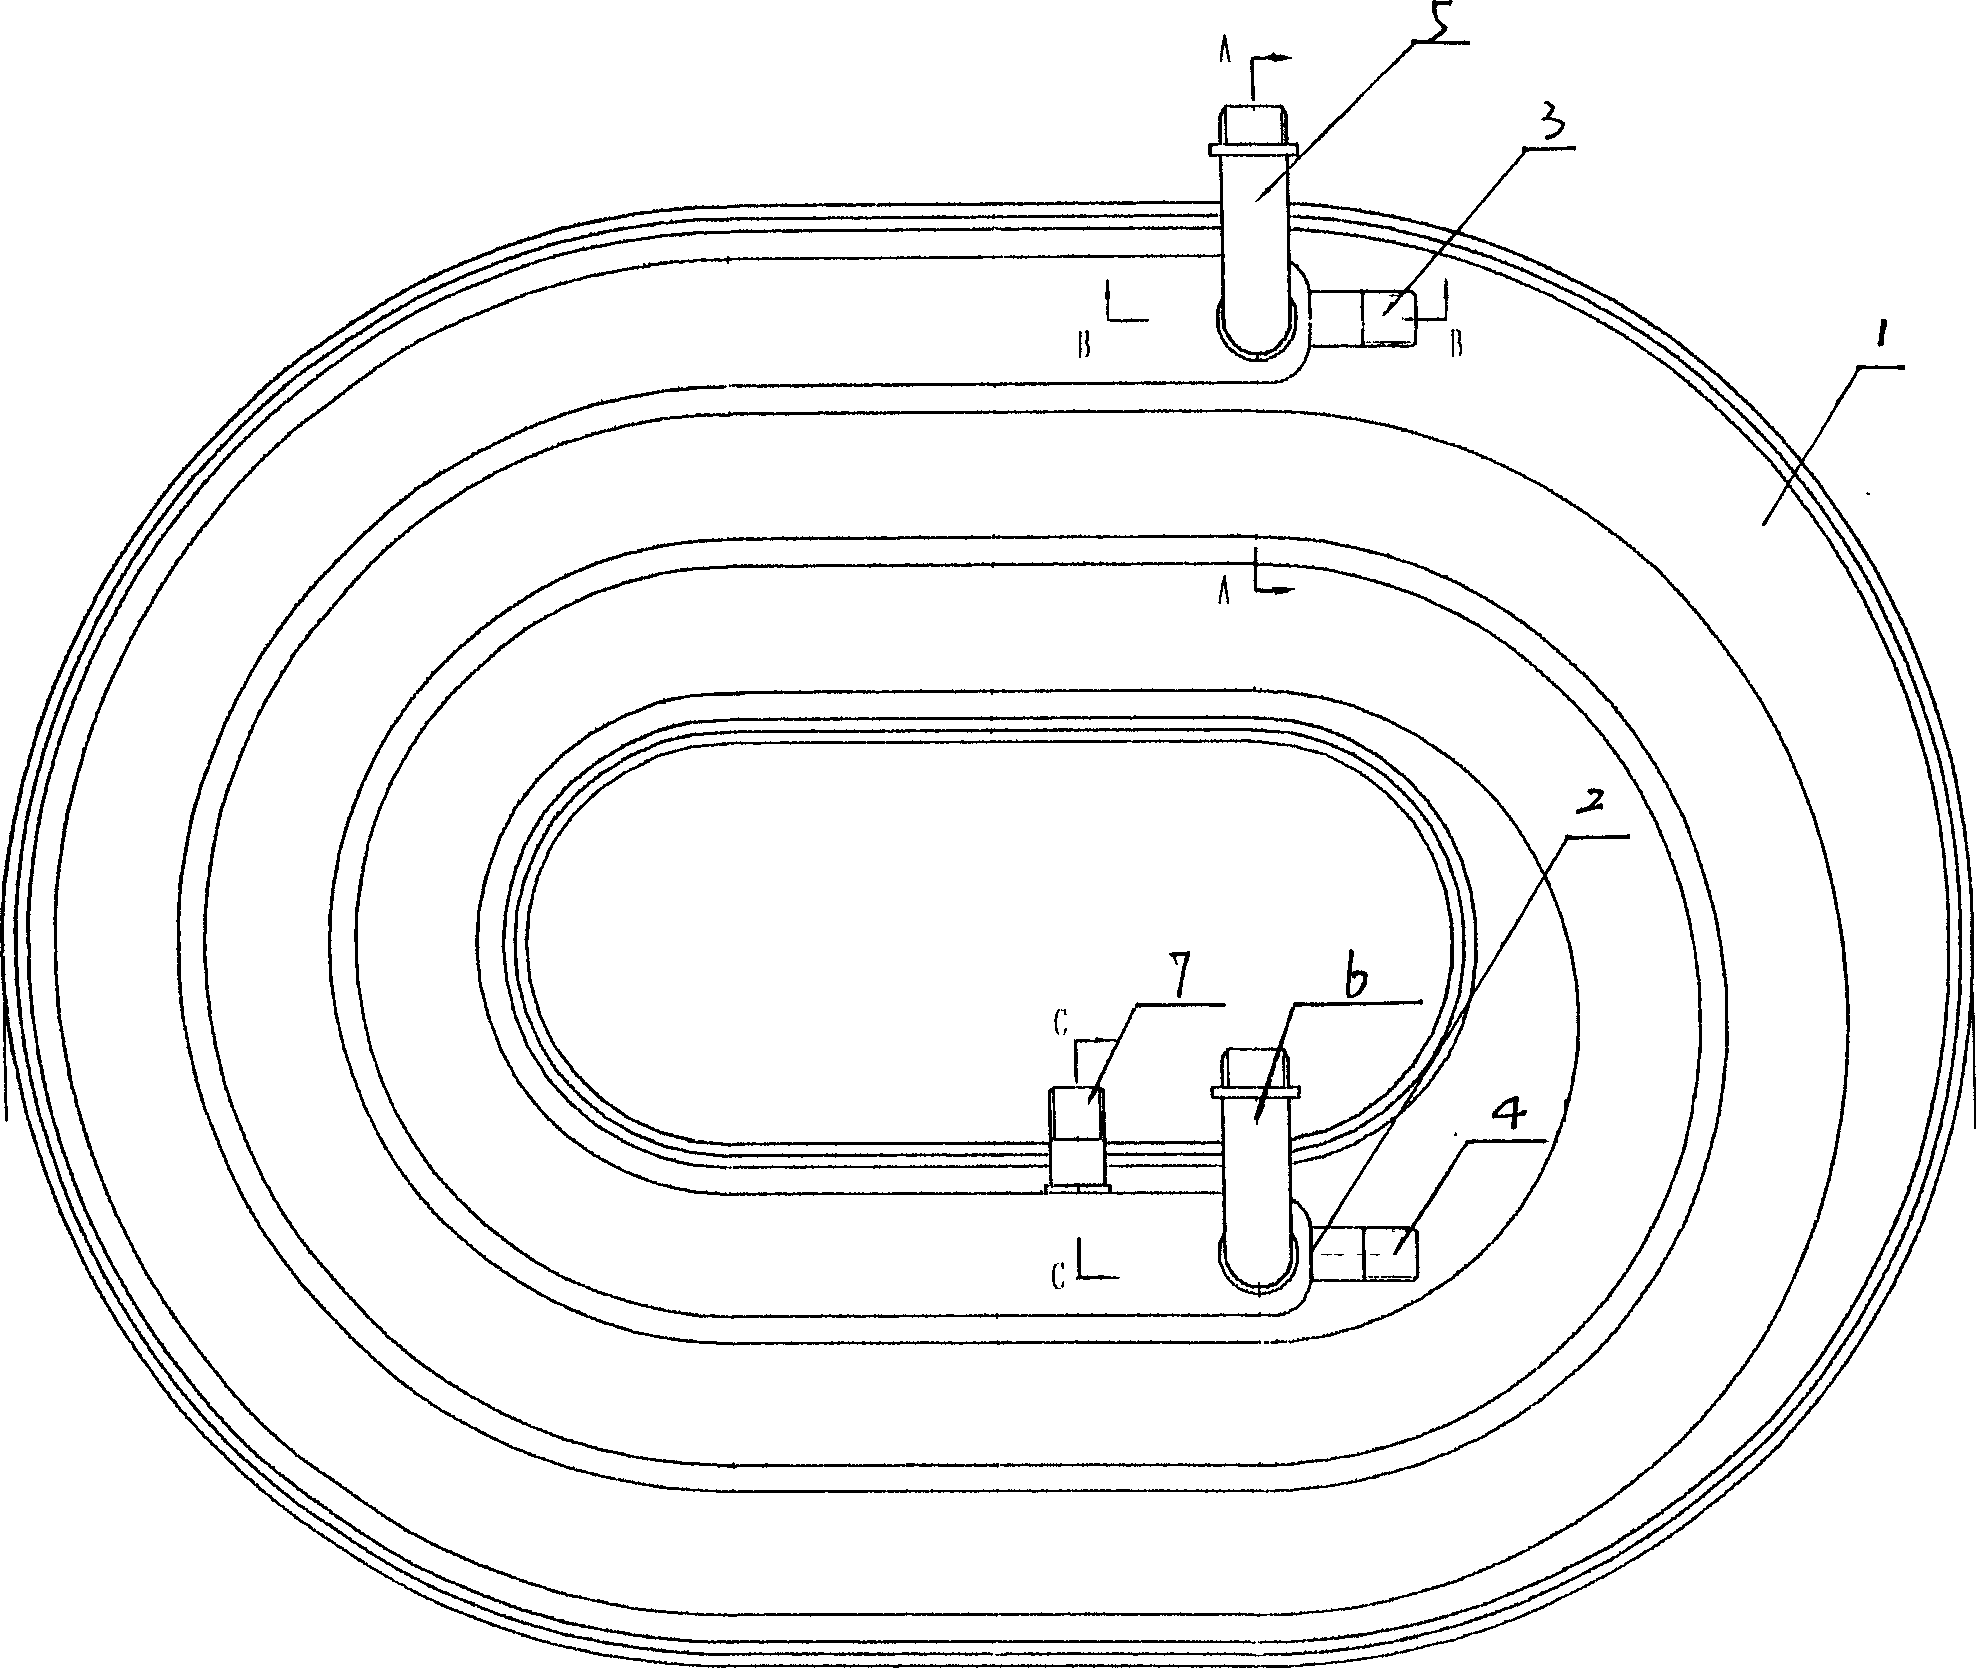 Spiral bellows type heat exchanger